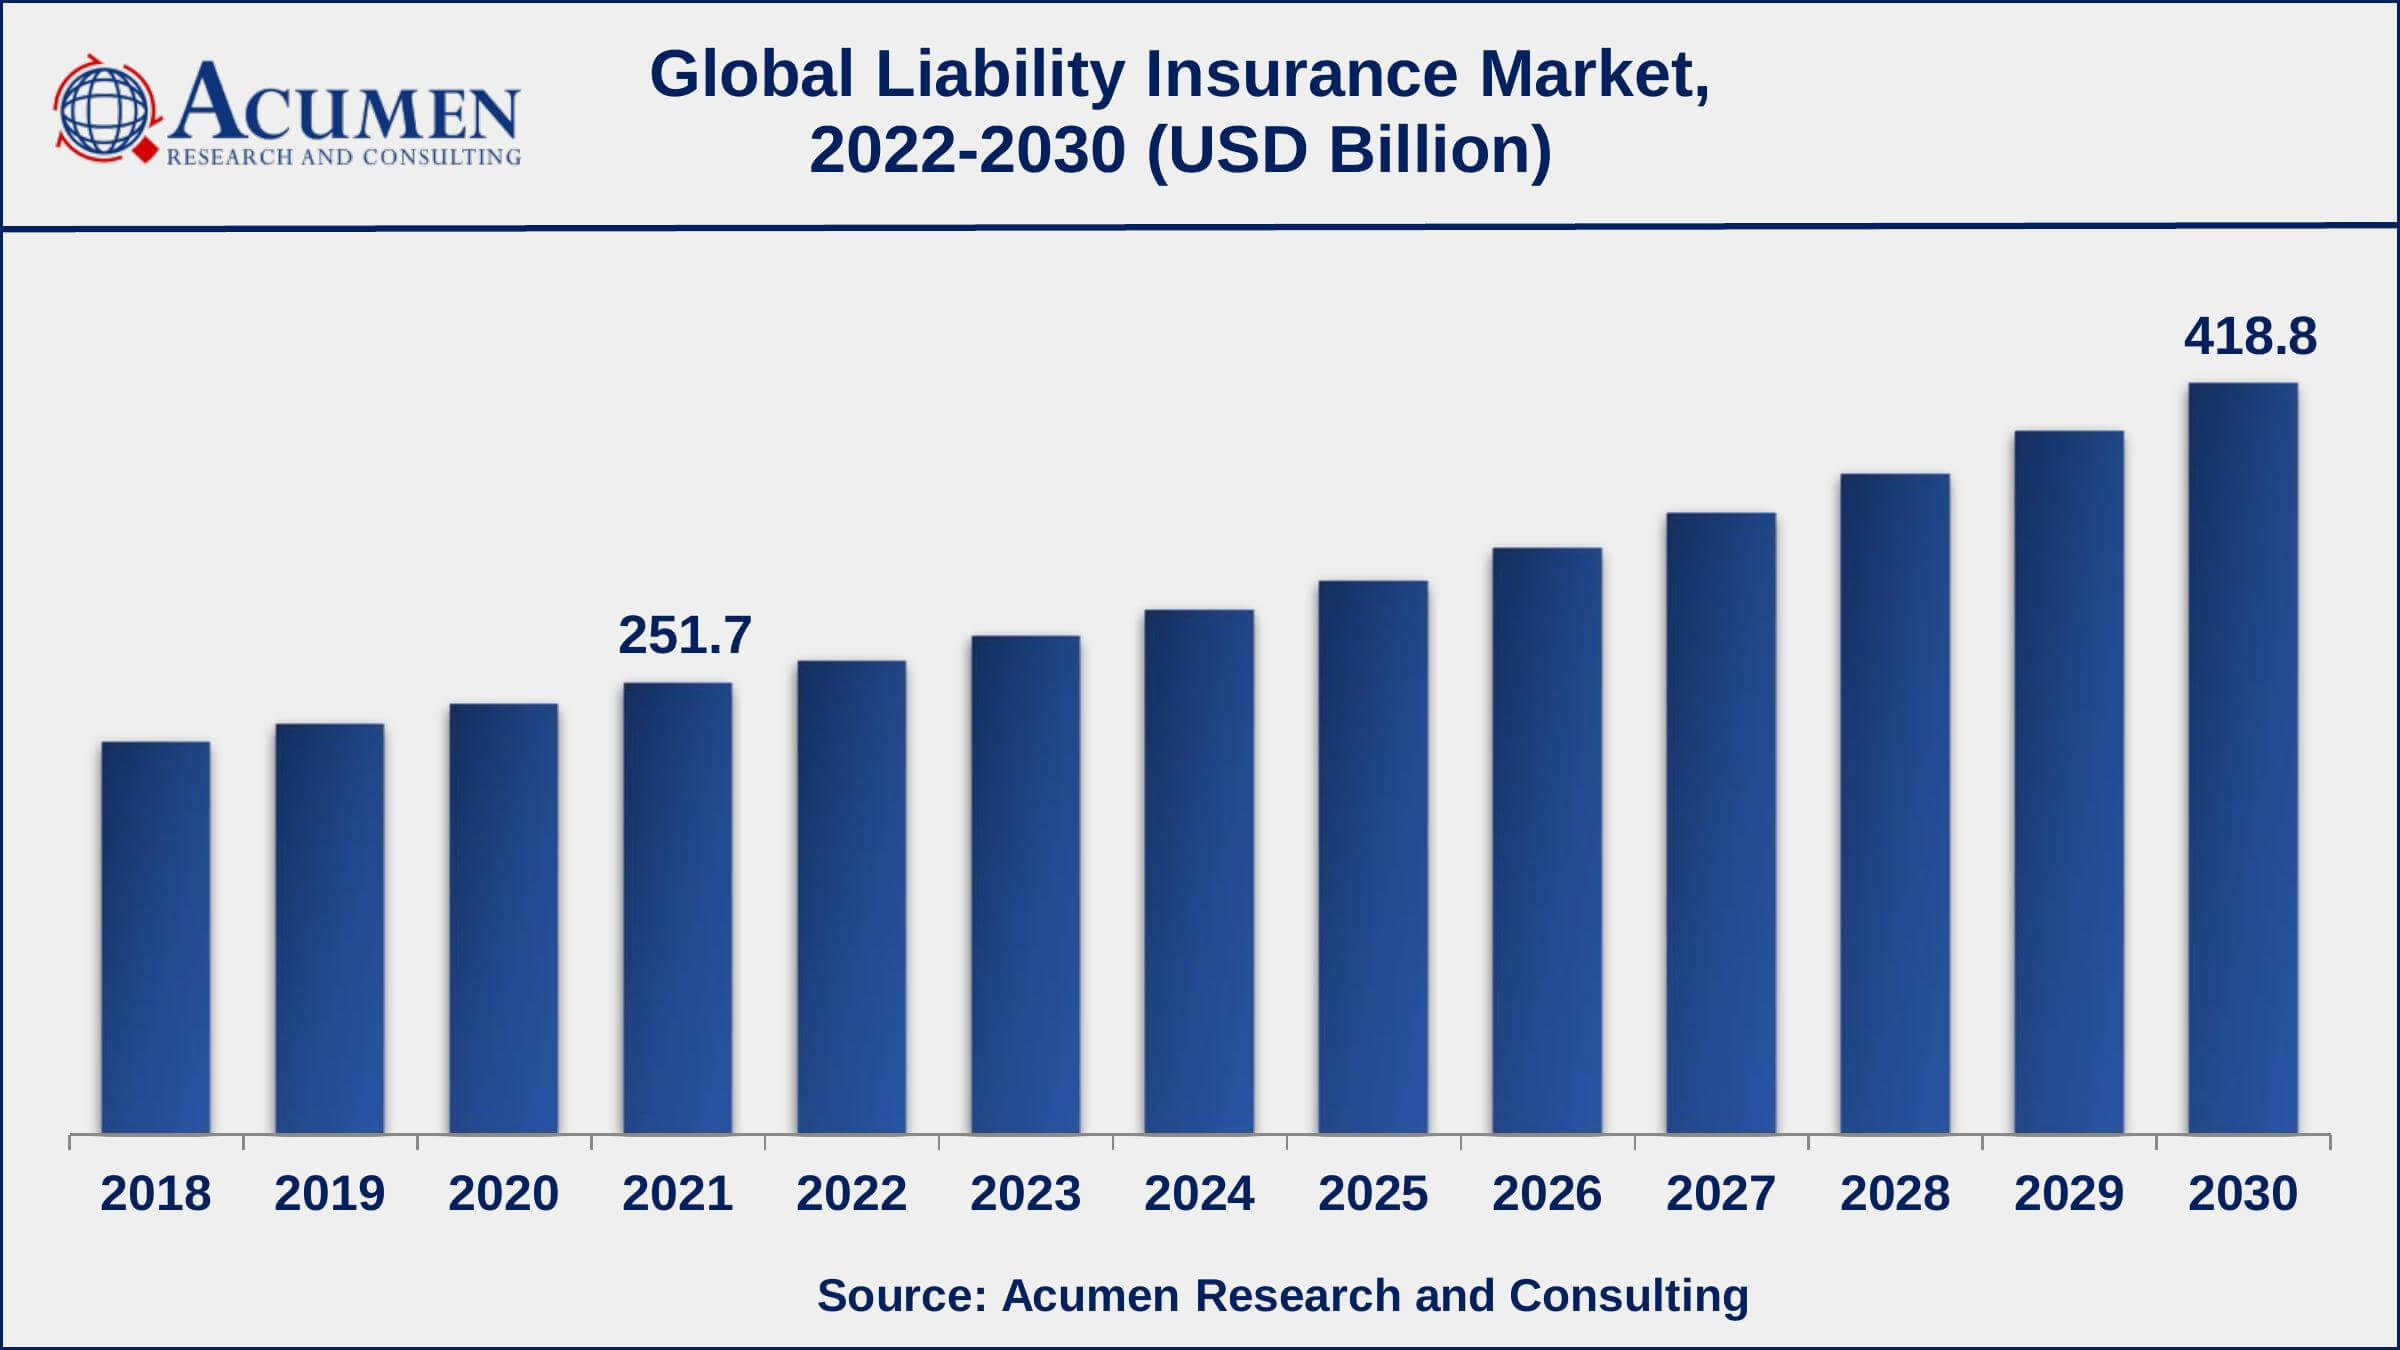 Global Liability Insurance Market Dynamics